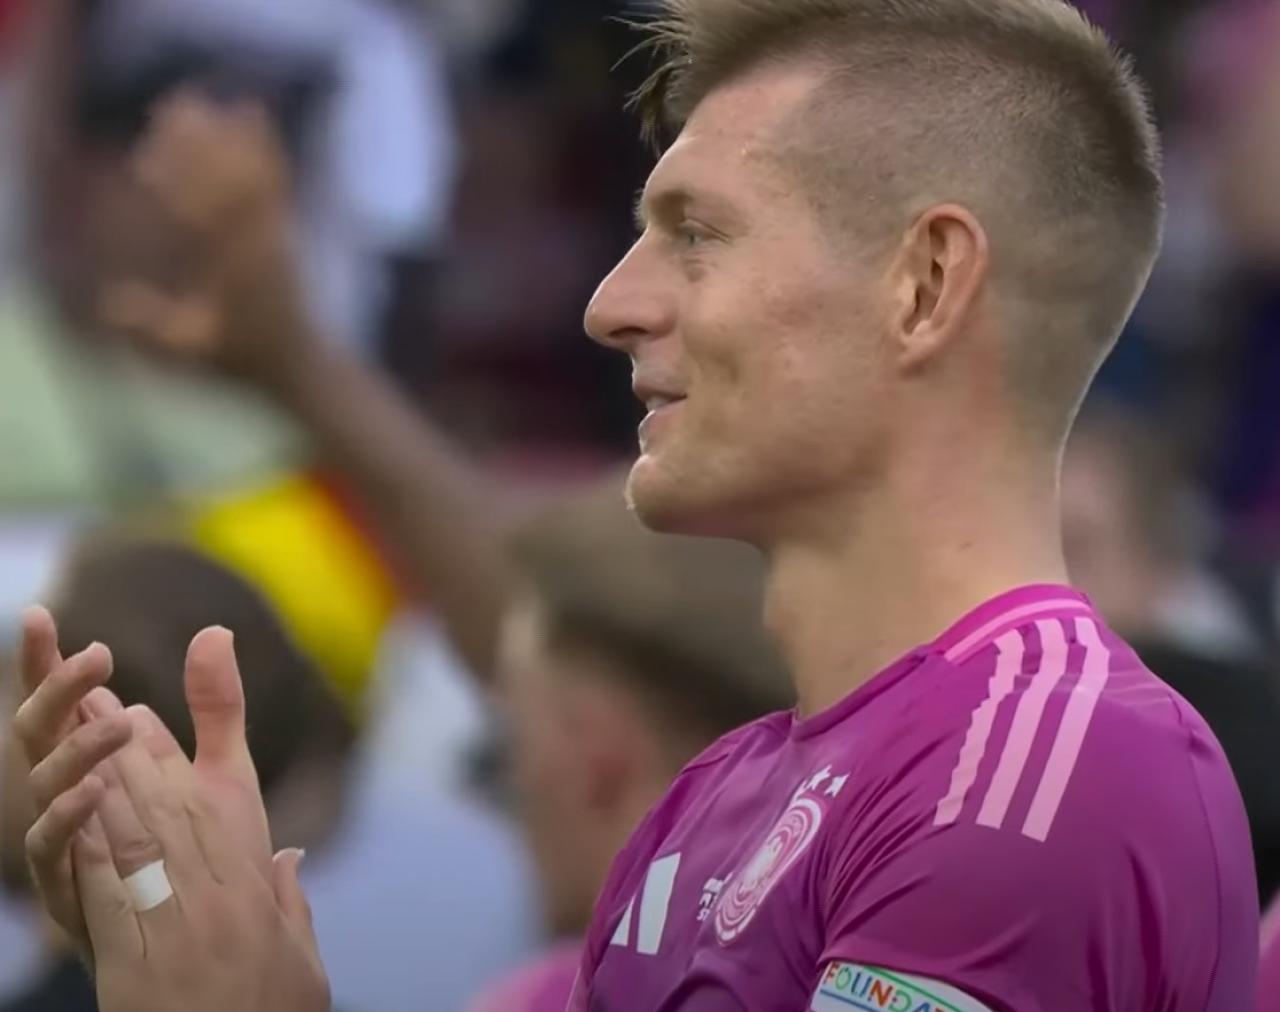 Kroos admits Cucurella's handball made him “angry”